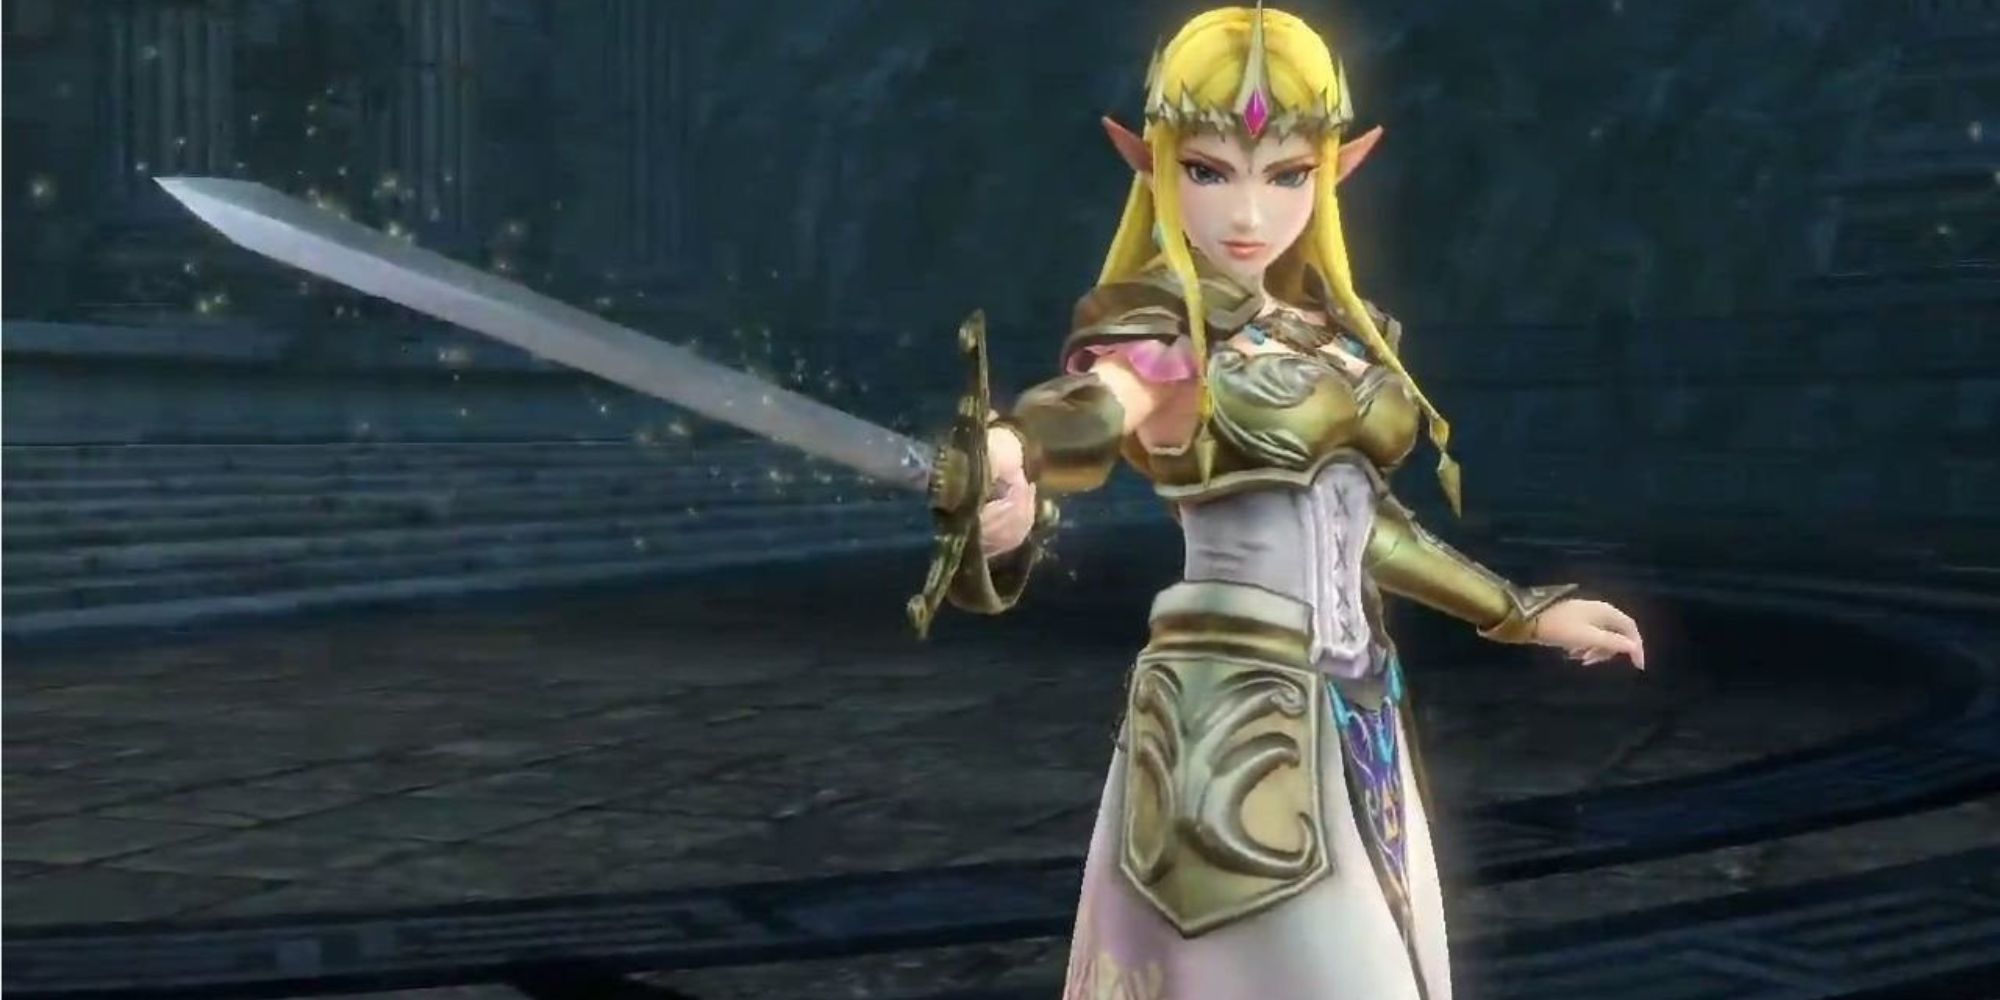 Zelda holds a sword in front of her